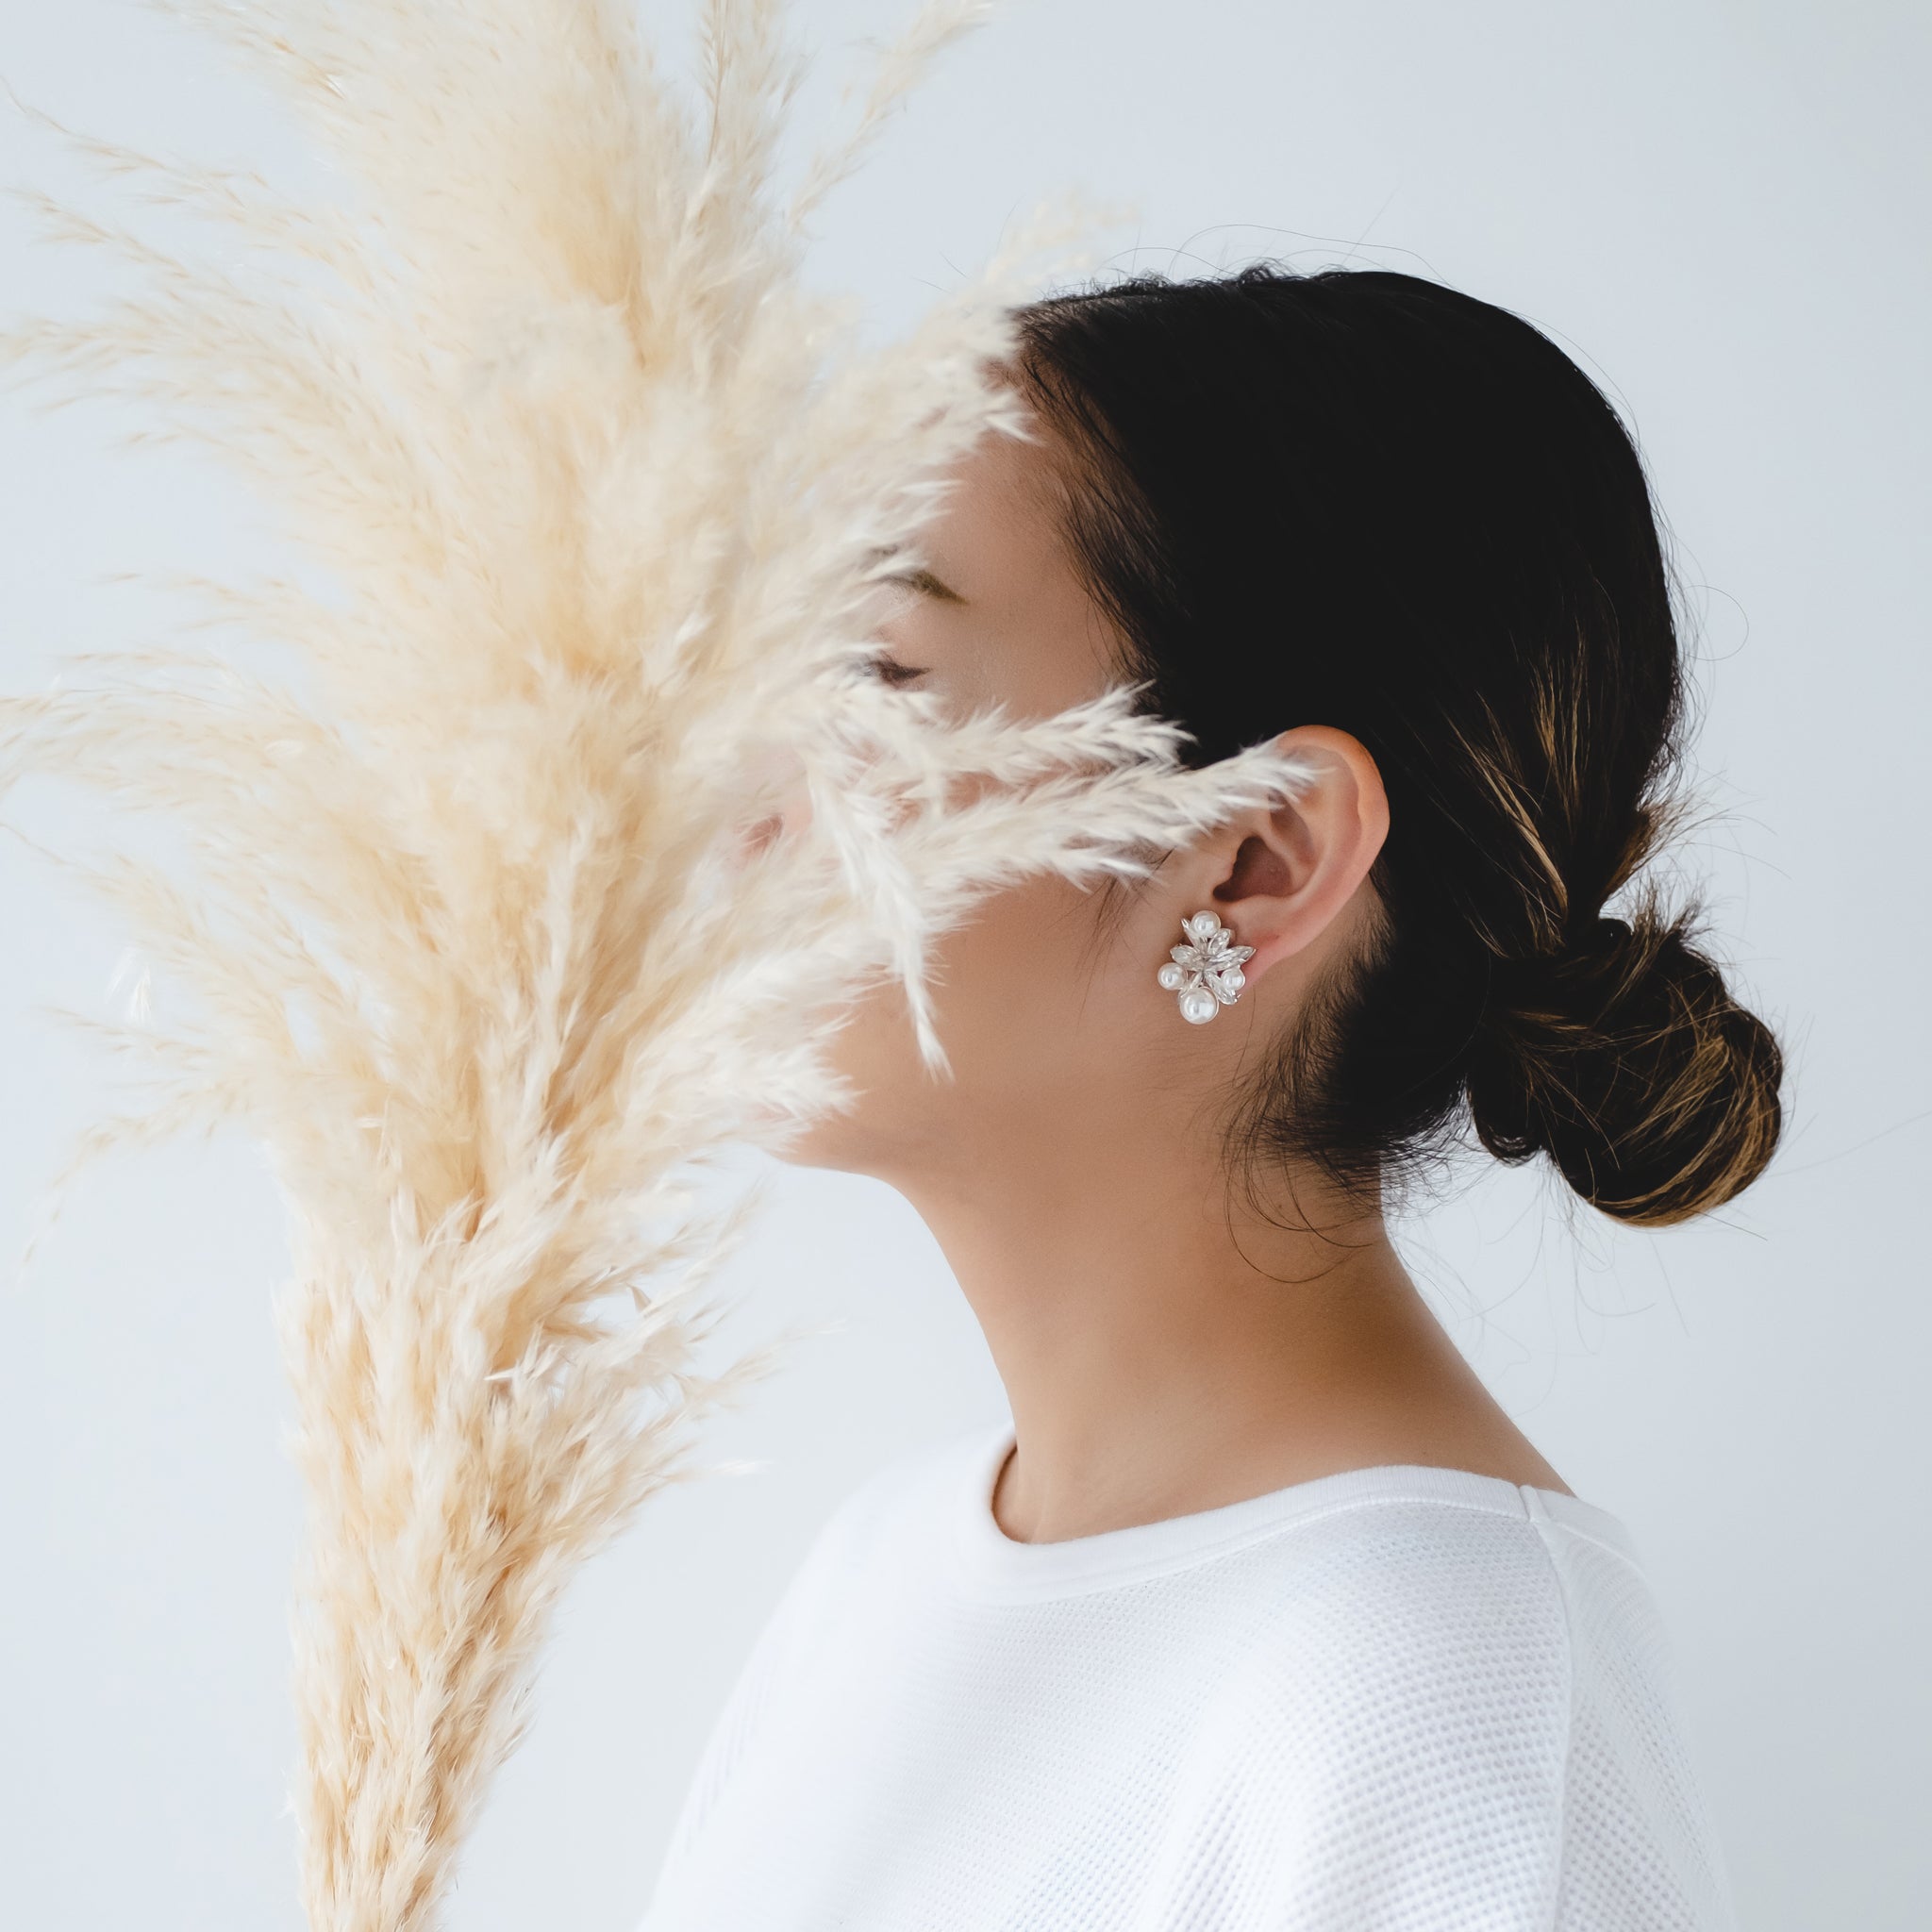 Pearl Bijou Flower motif earrings